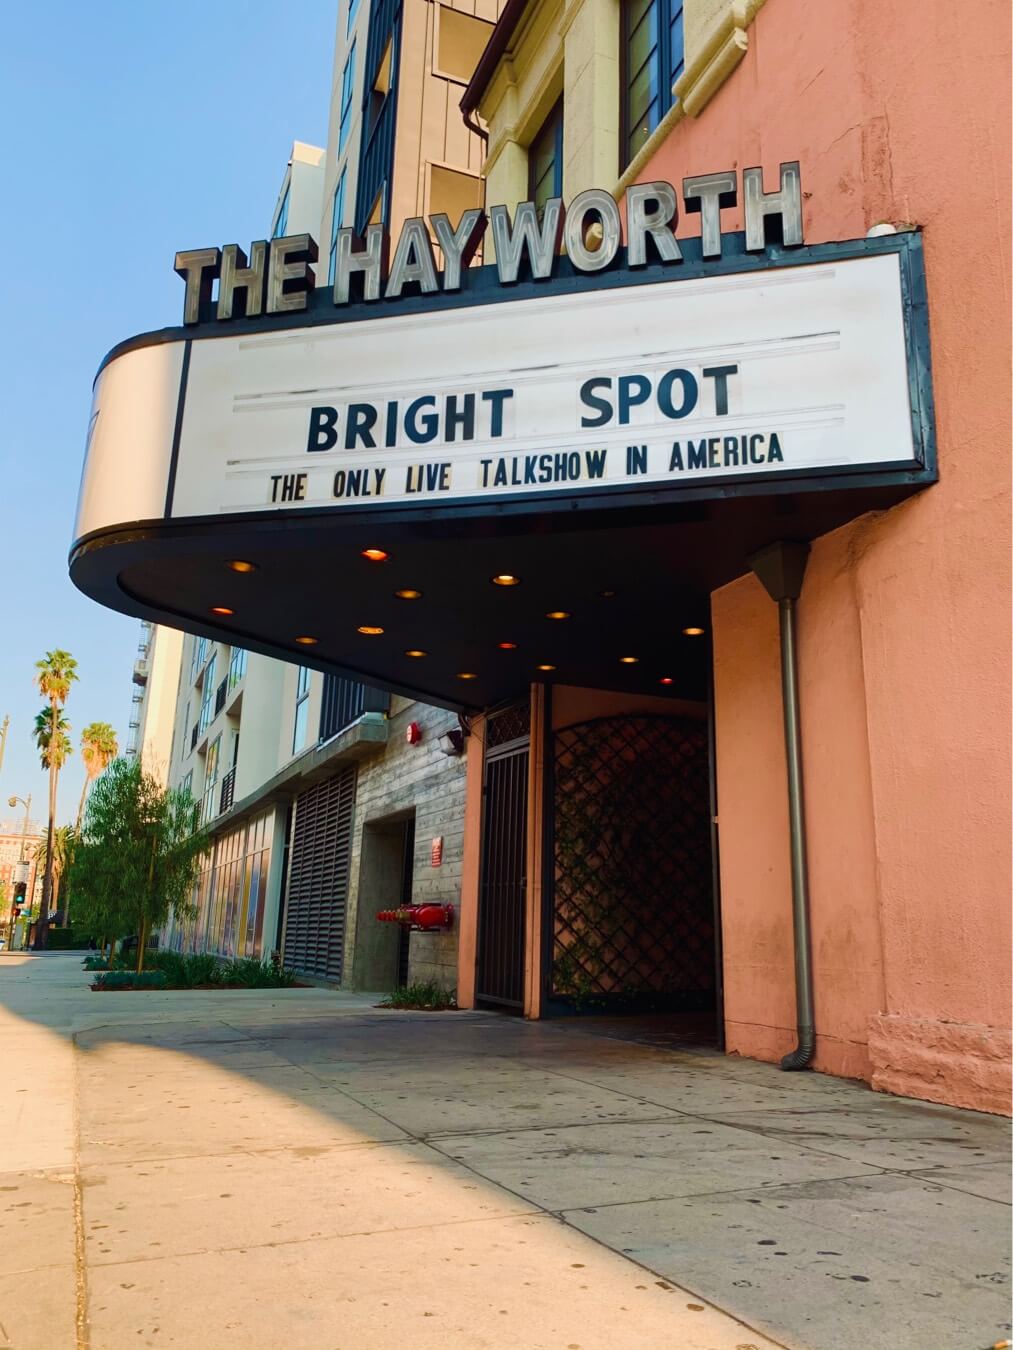 Bright Spot (10.17.2020)